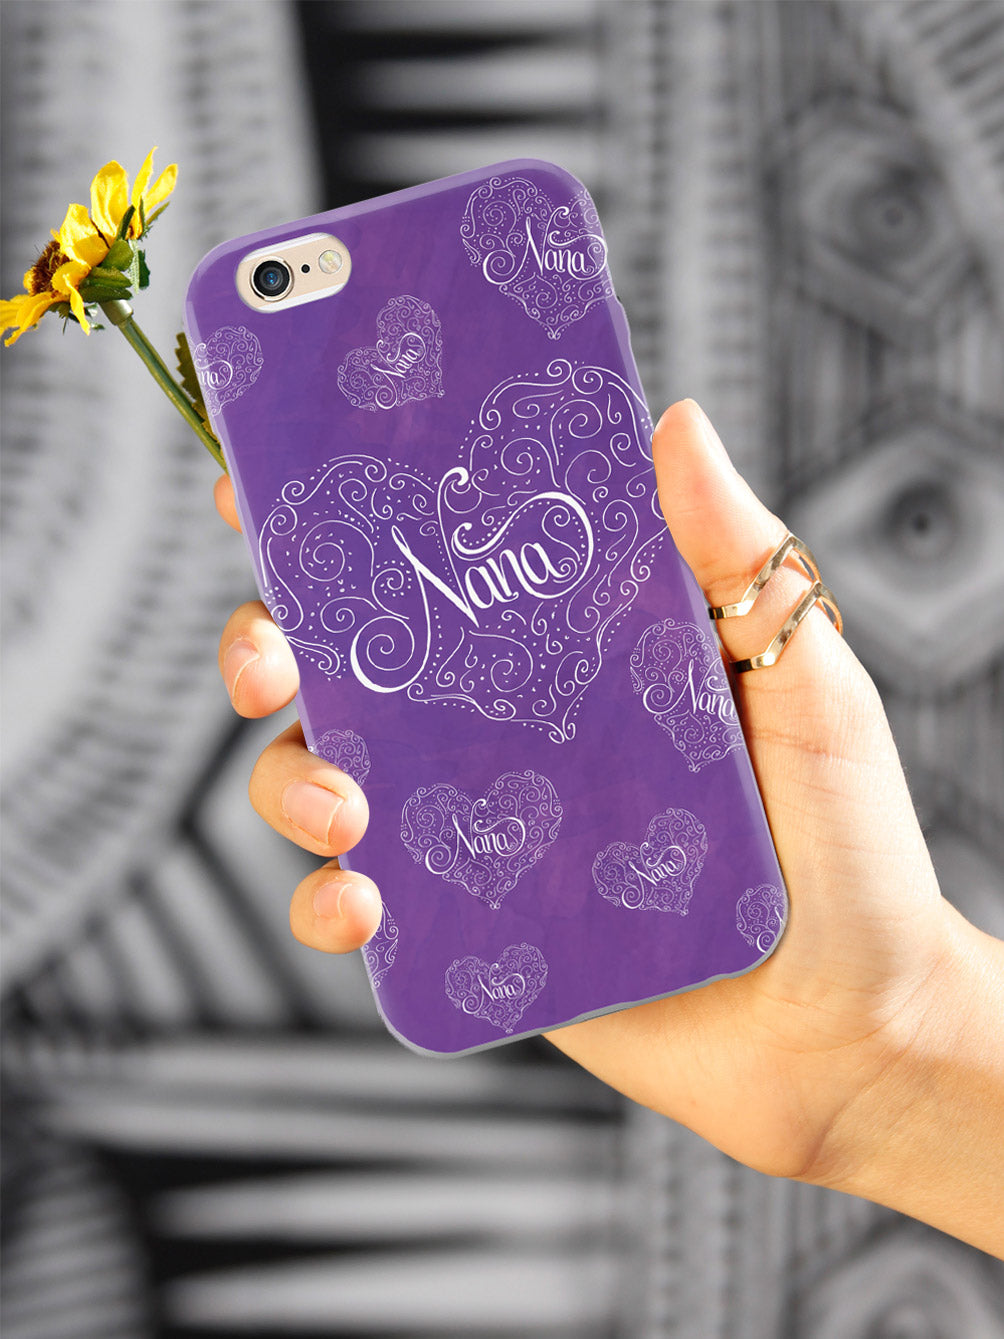 Nana Doodle Heart - Purple Case